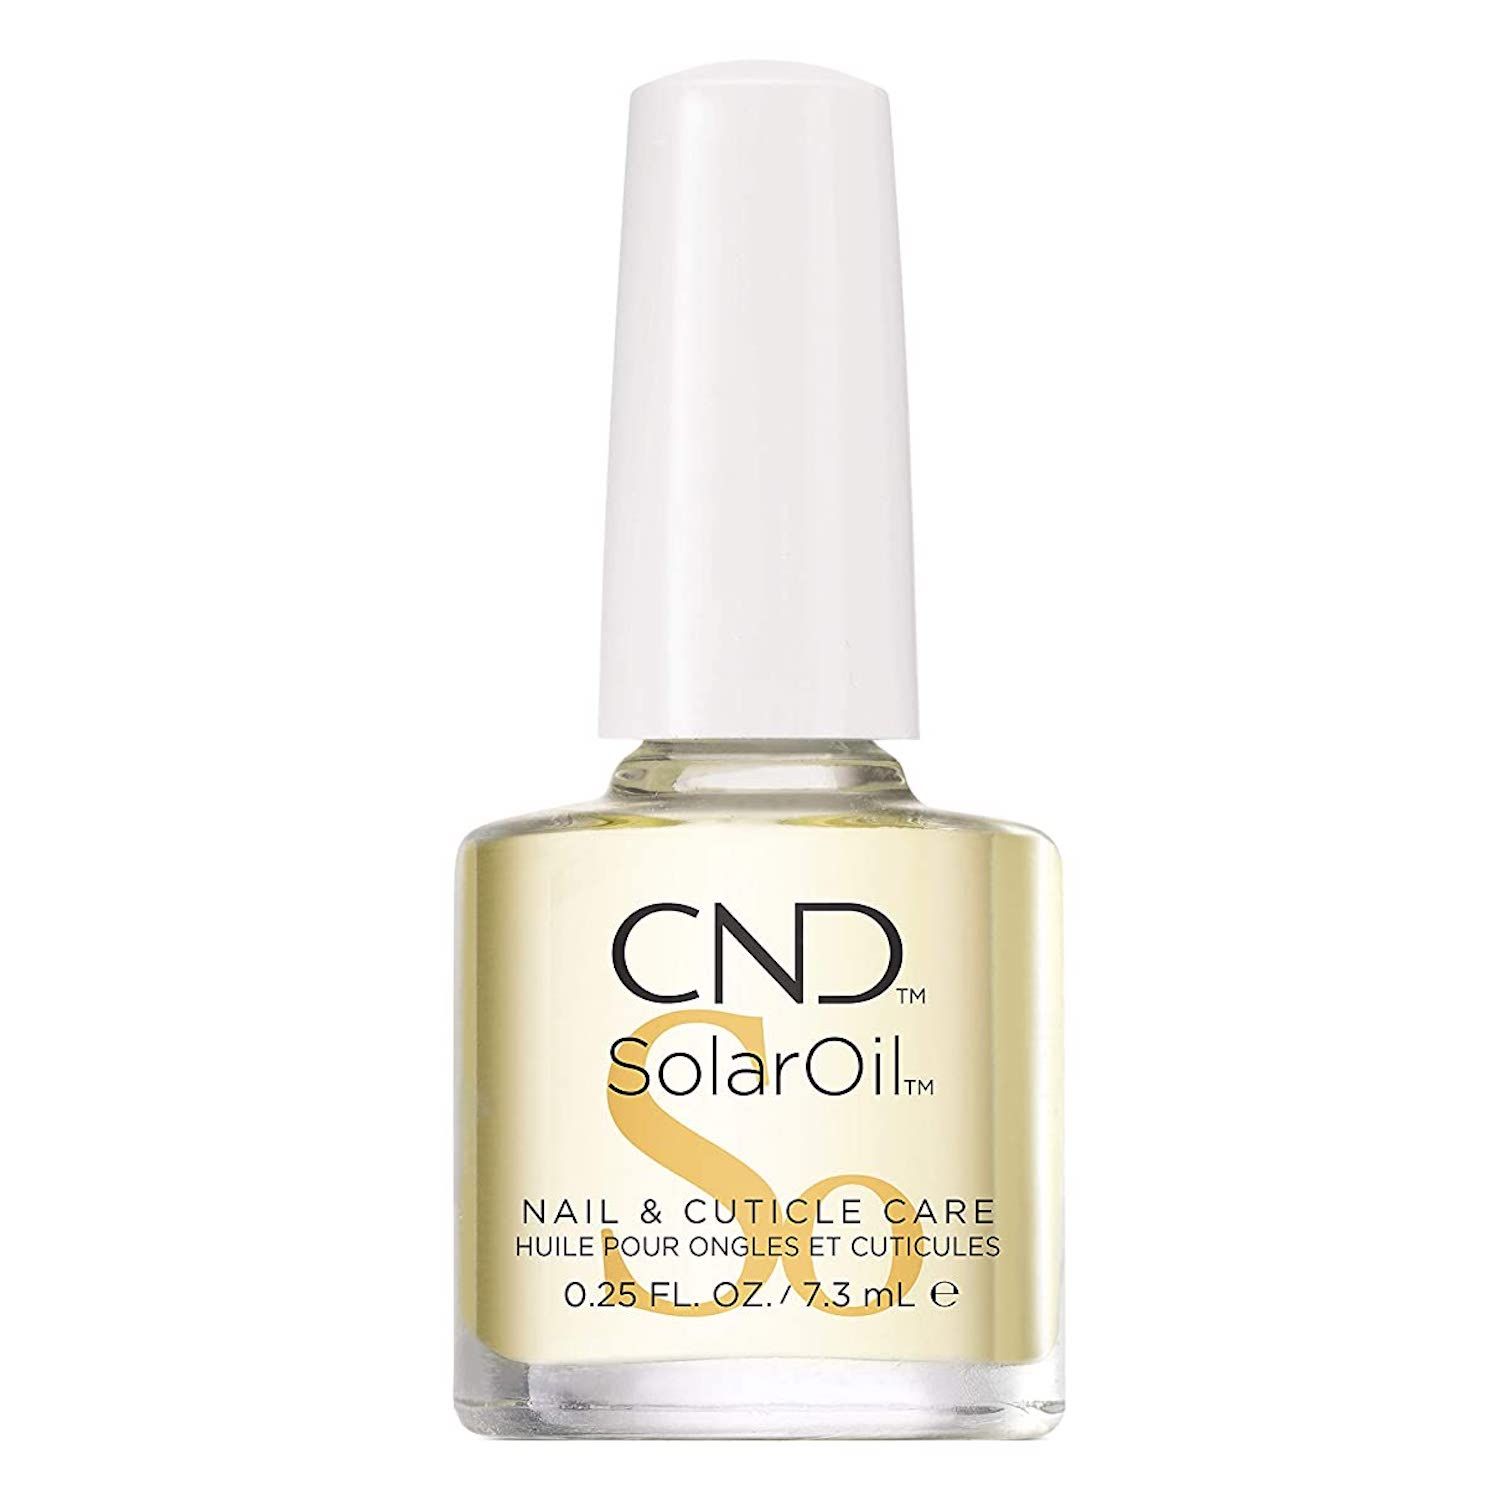 CND SolarOil Nail & Cuticle Care, for tørre, skadede neglebånd, tilført jojobaolje